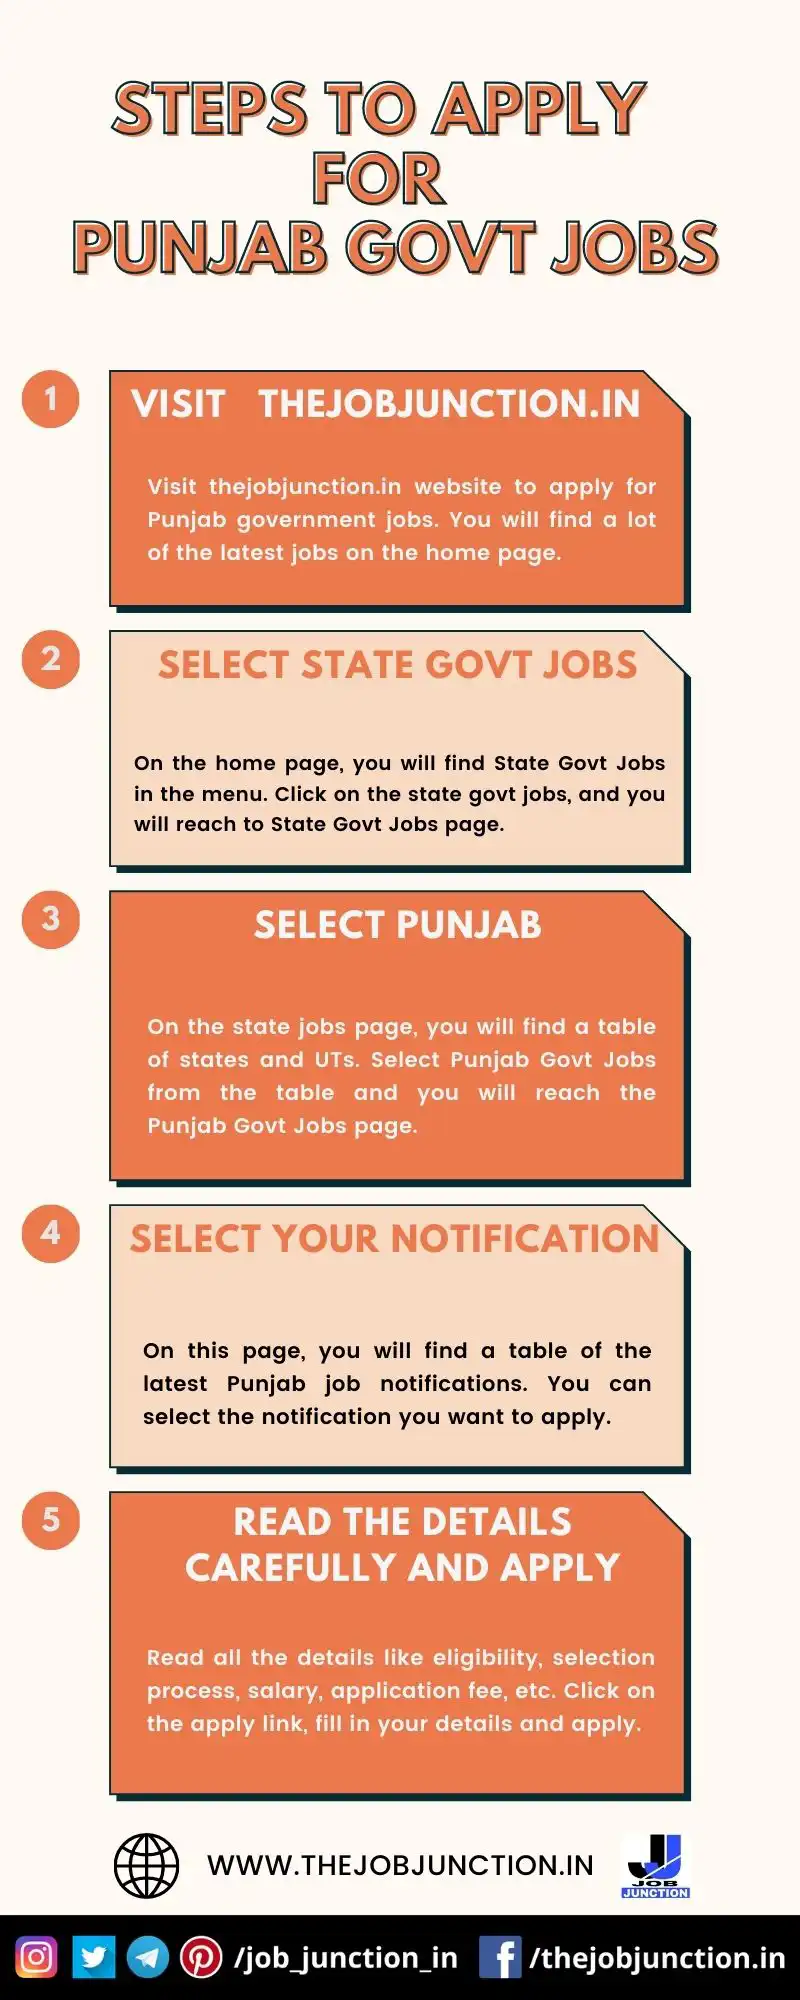 STEPS TO APPLY FOR PUNJAB GOVT JOBS